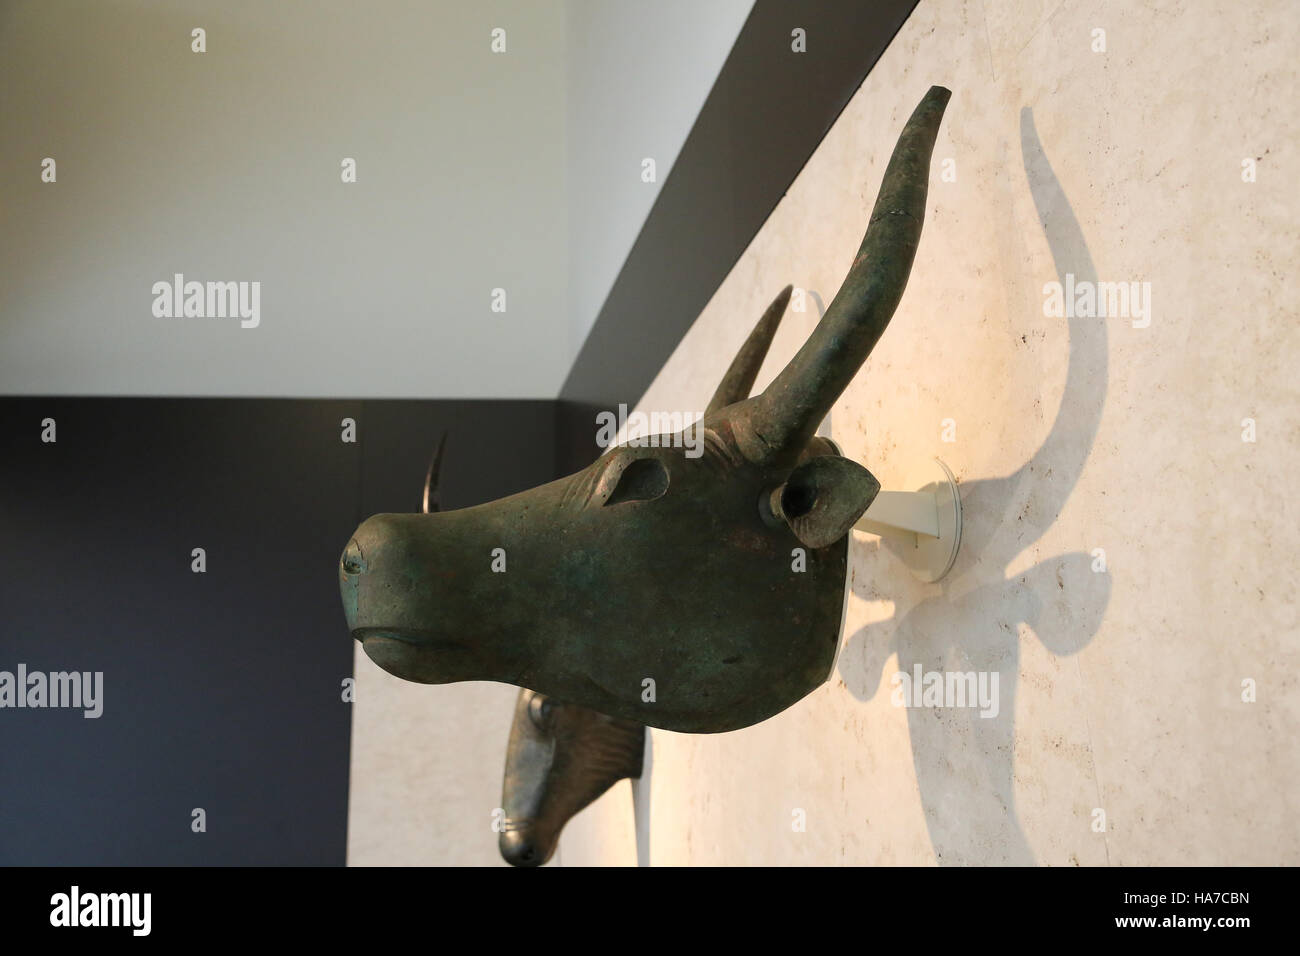 Bulls from Costitx. 500 BC-200 BC. Iron age. Material: bronze. Shrine of Predio de Son Corro, Costitx, Majorca, Spain. National Archaeological Museum, Stock Photo